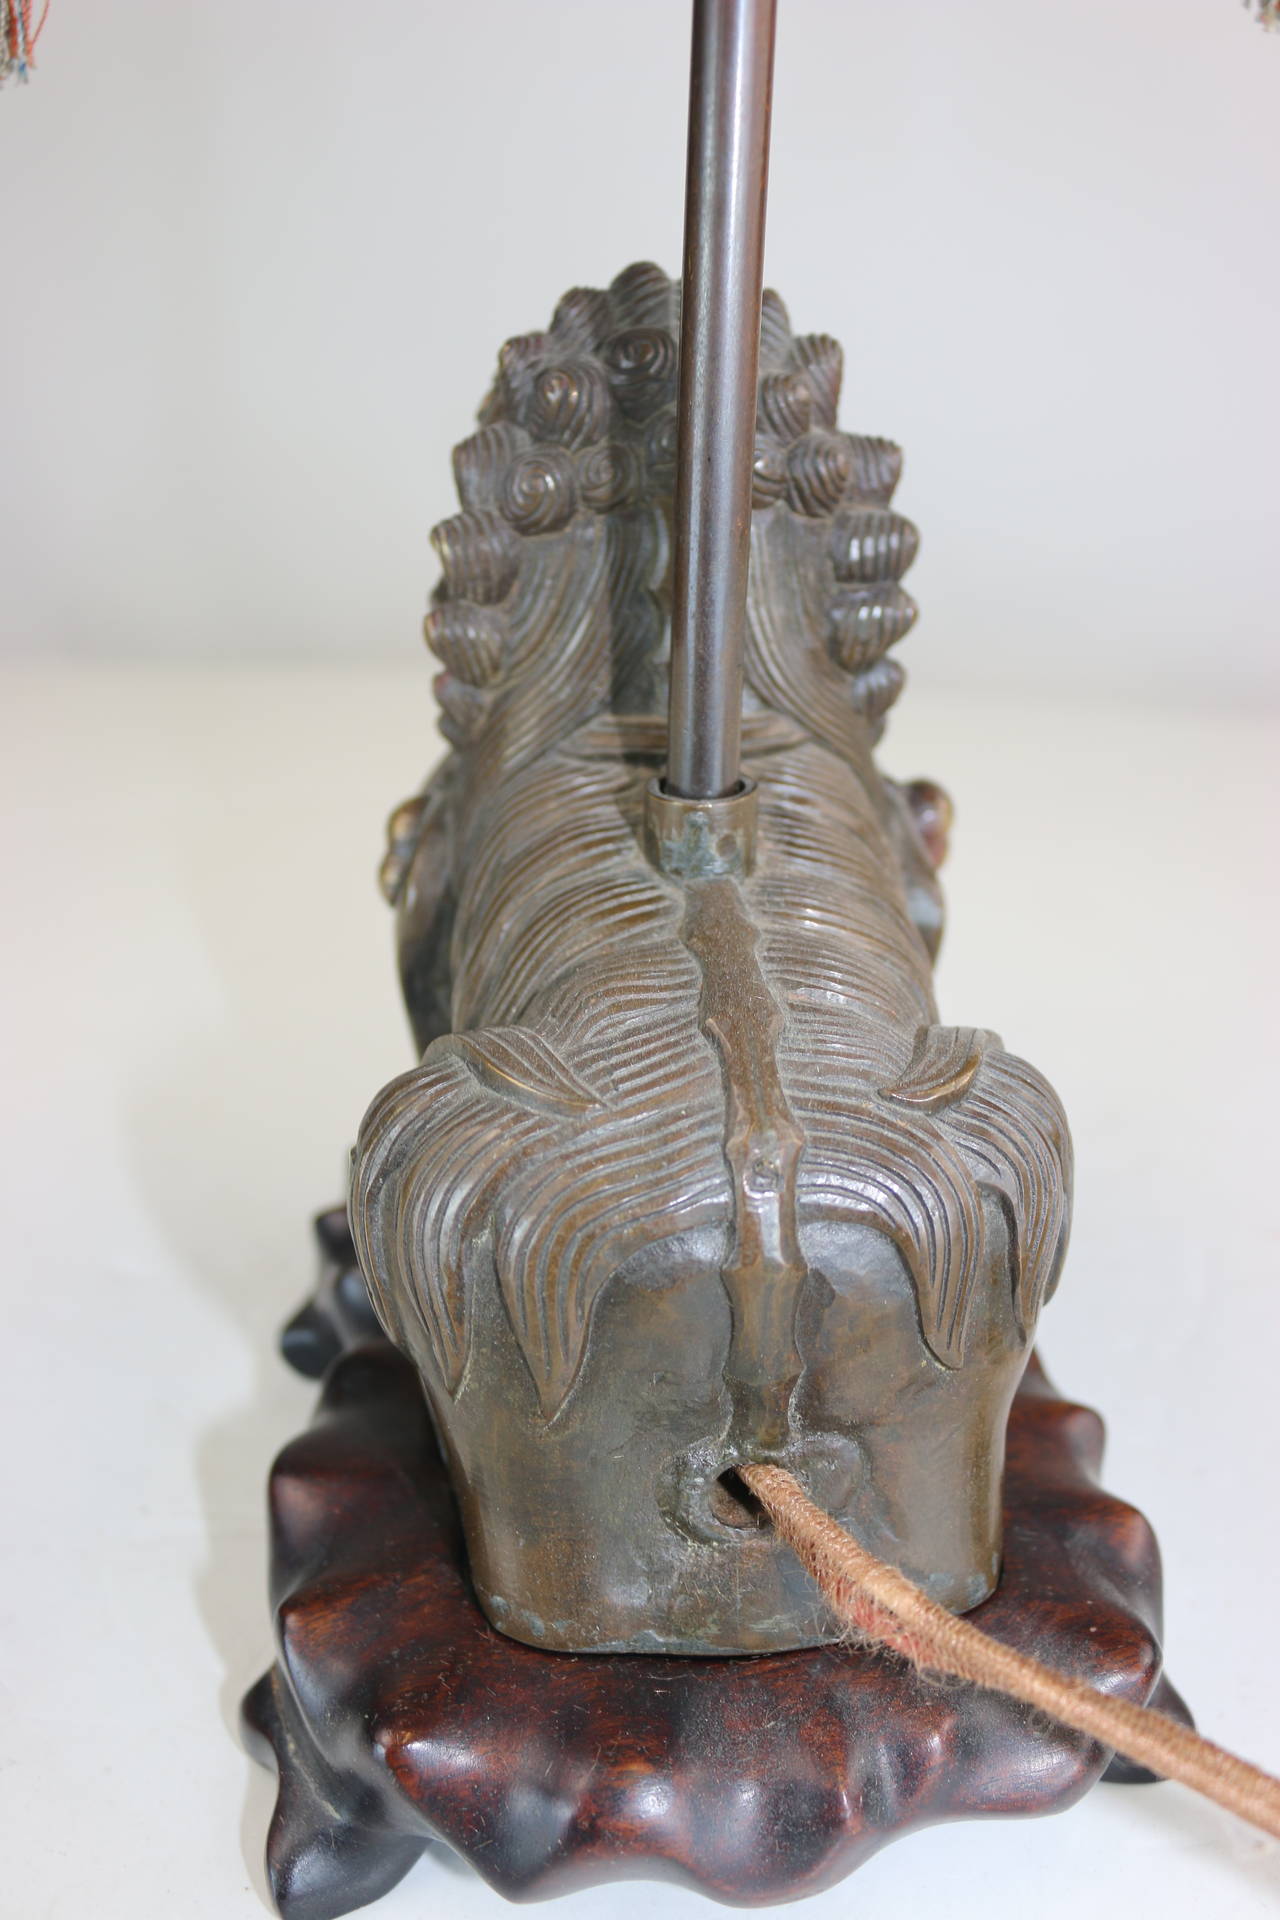 20th Century Rare 1920s Chinoiserie Table Lamp- Tasseled Pagoda Shade- Exotic Foo Dog Base For Sale